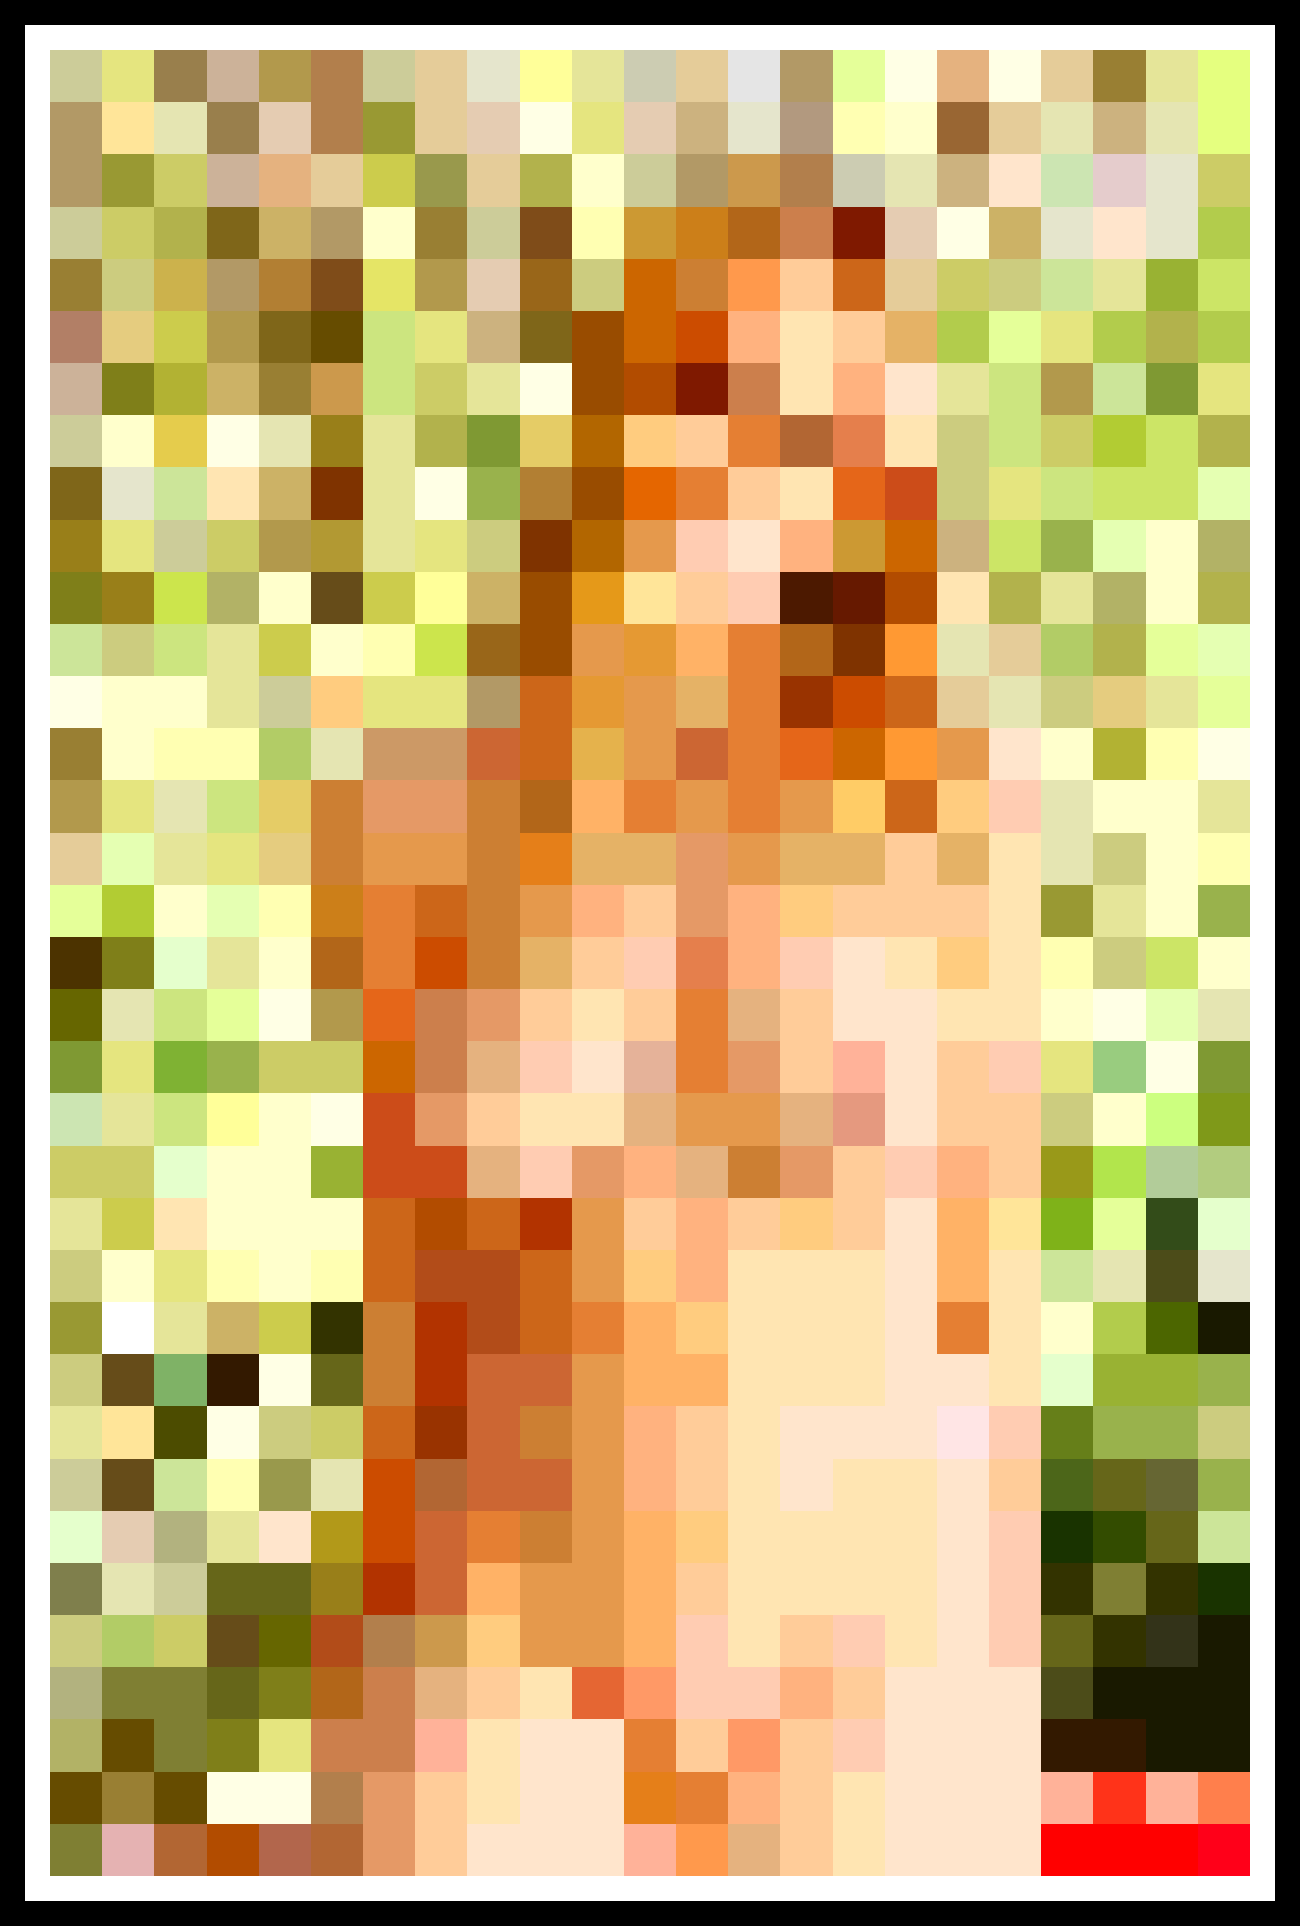 Camera Upskirt Law Boston - Nude Pinup Model Pixel Art 202 - NUDEZ | OpenSea